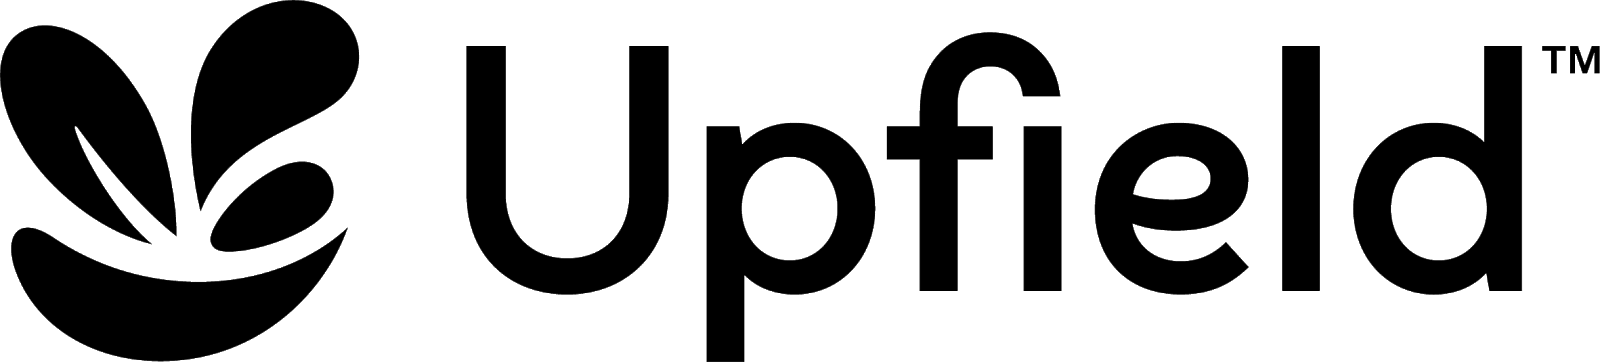 Upfield logo blakc